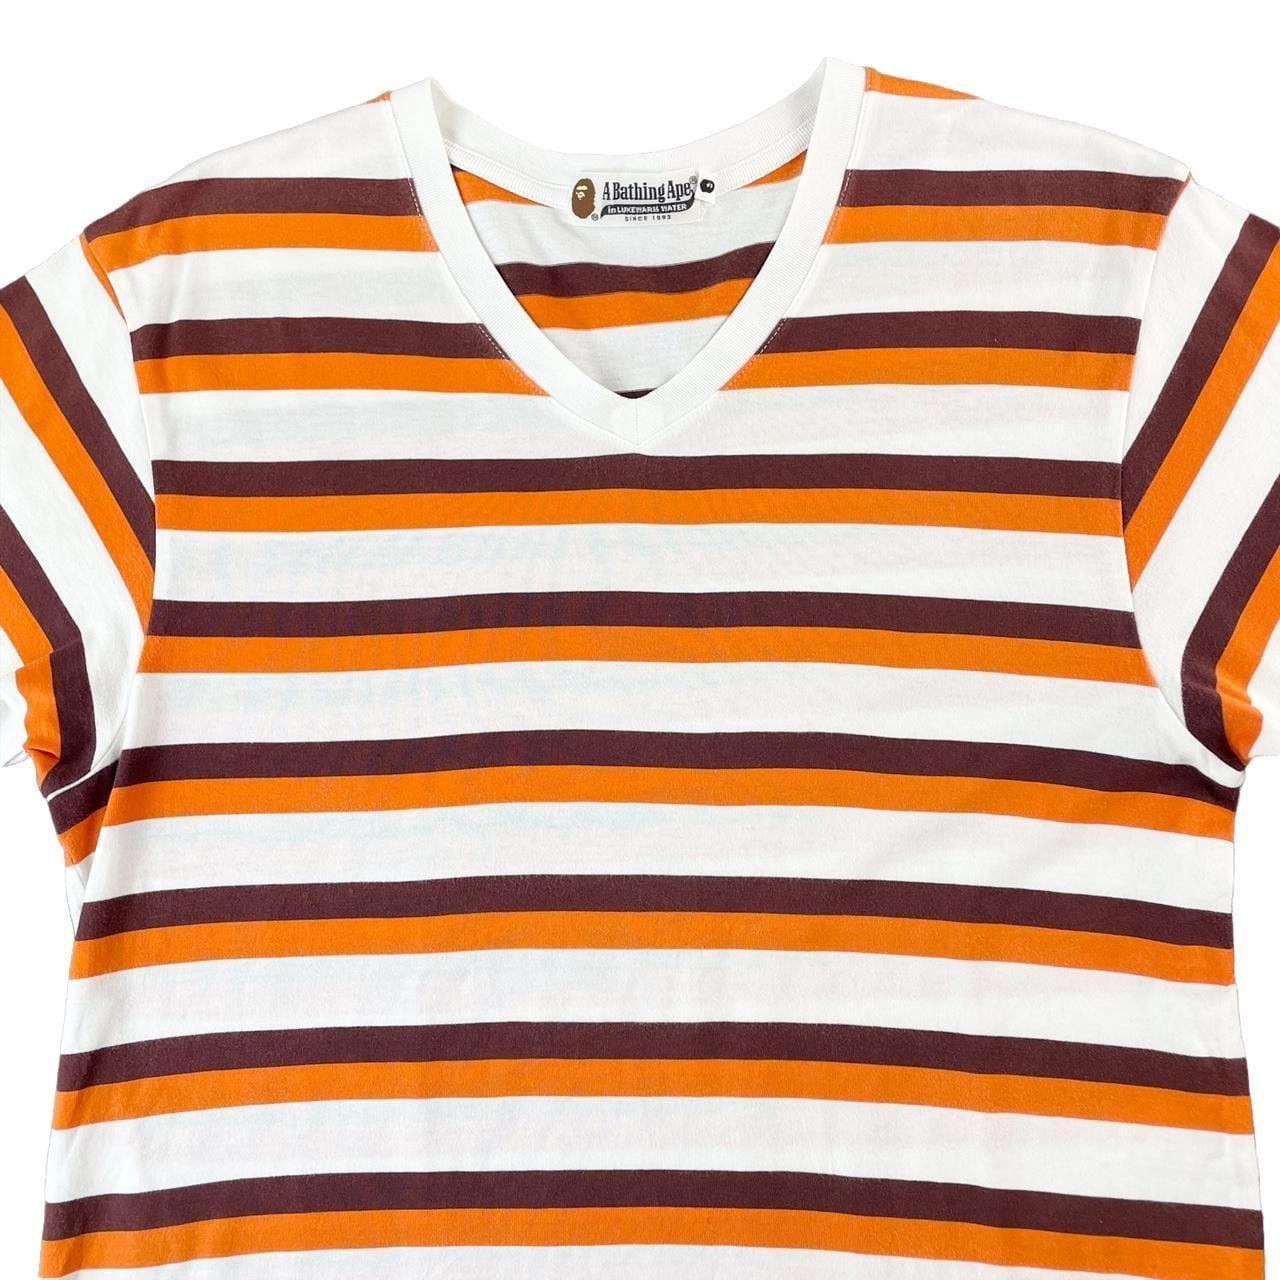 Vintage Bape striped t shirt size M - Known Source